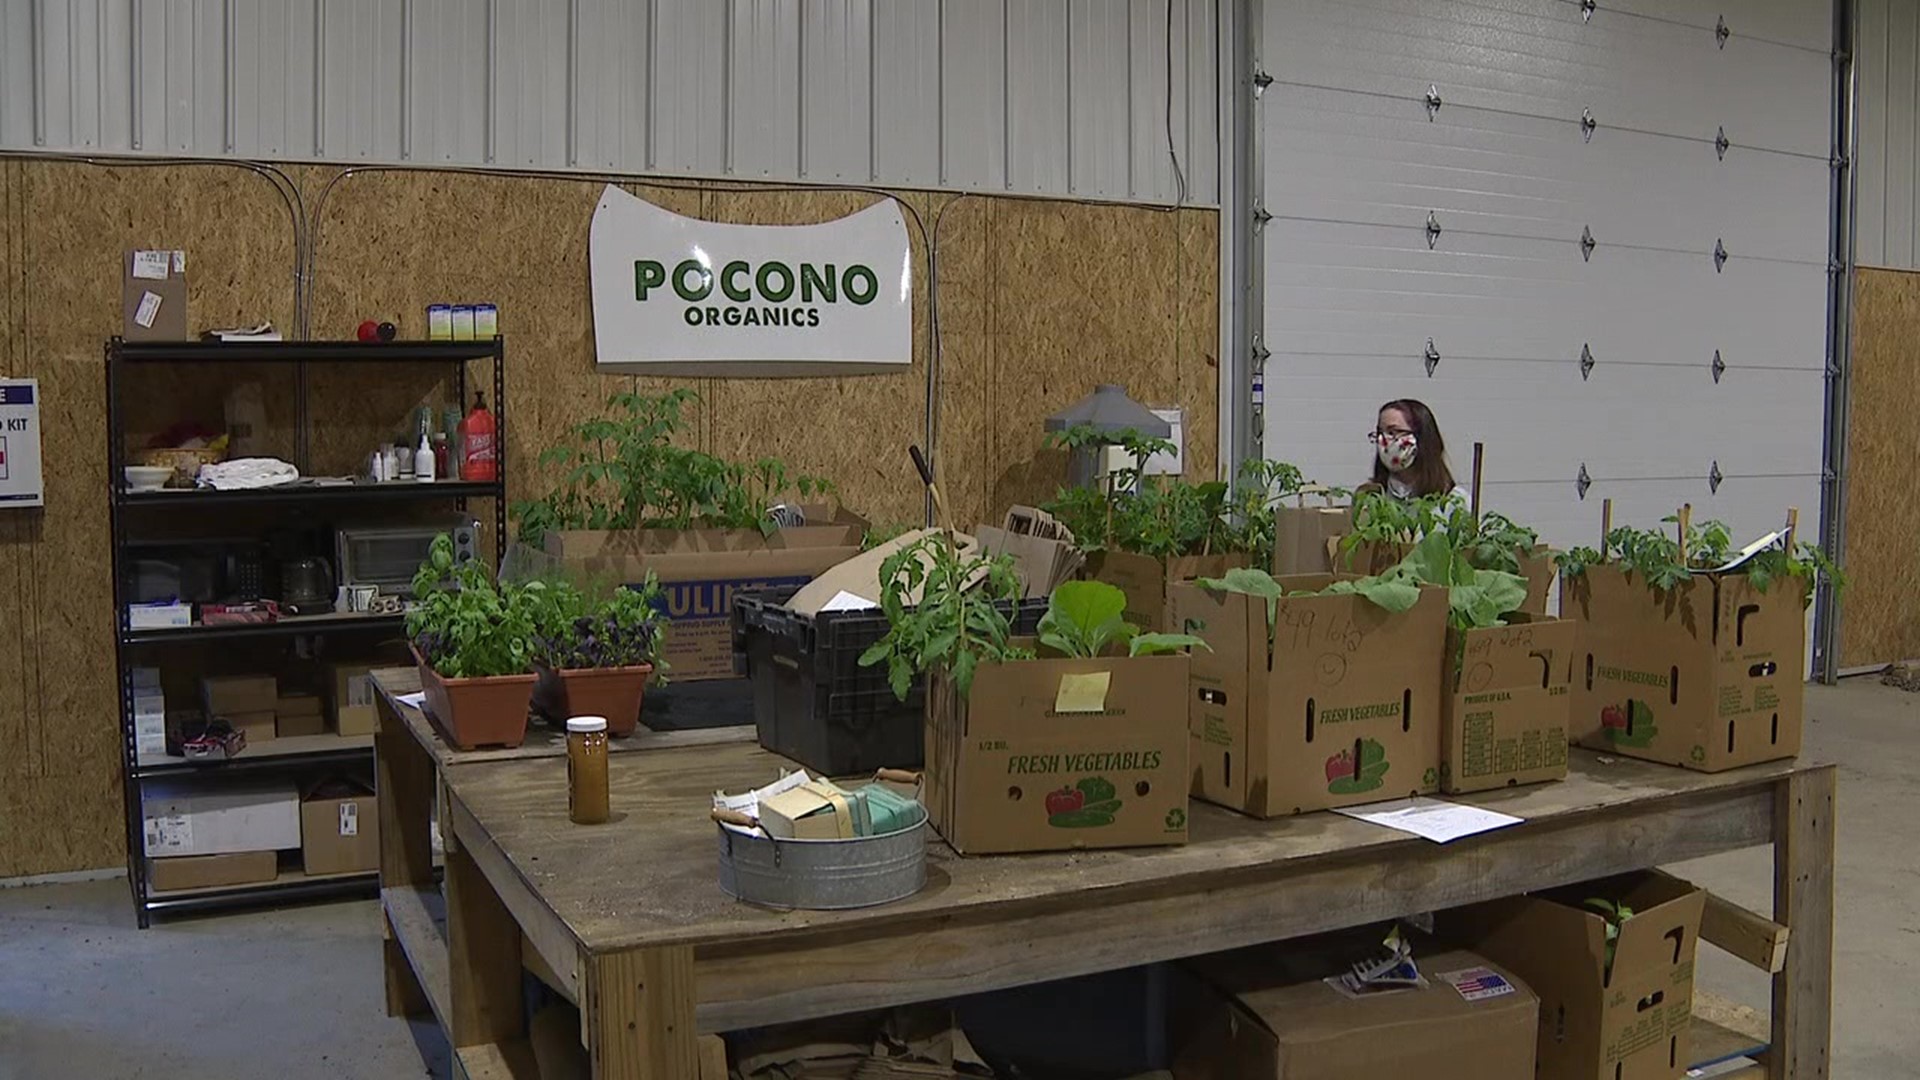 Pocono Organics, near Long Pond, opened its barn doors to people looking to get fresh produce.